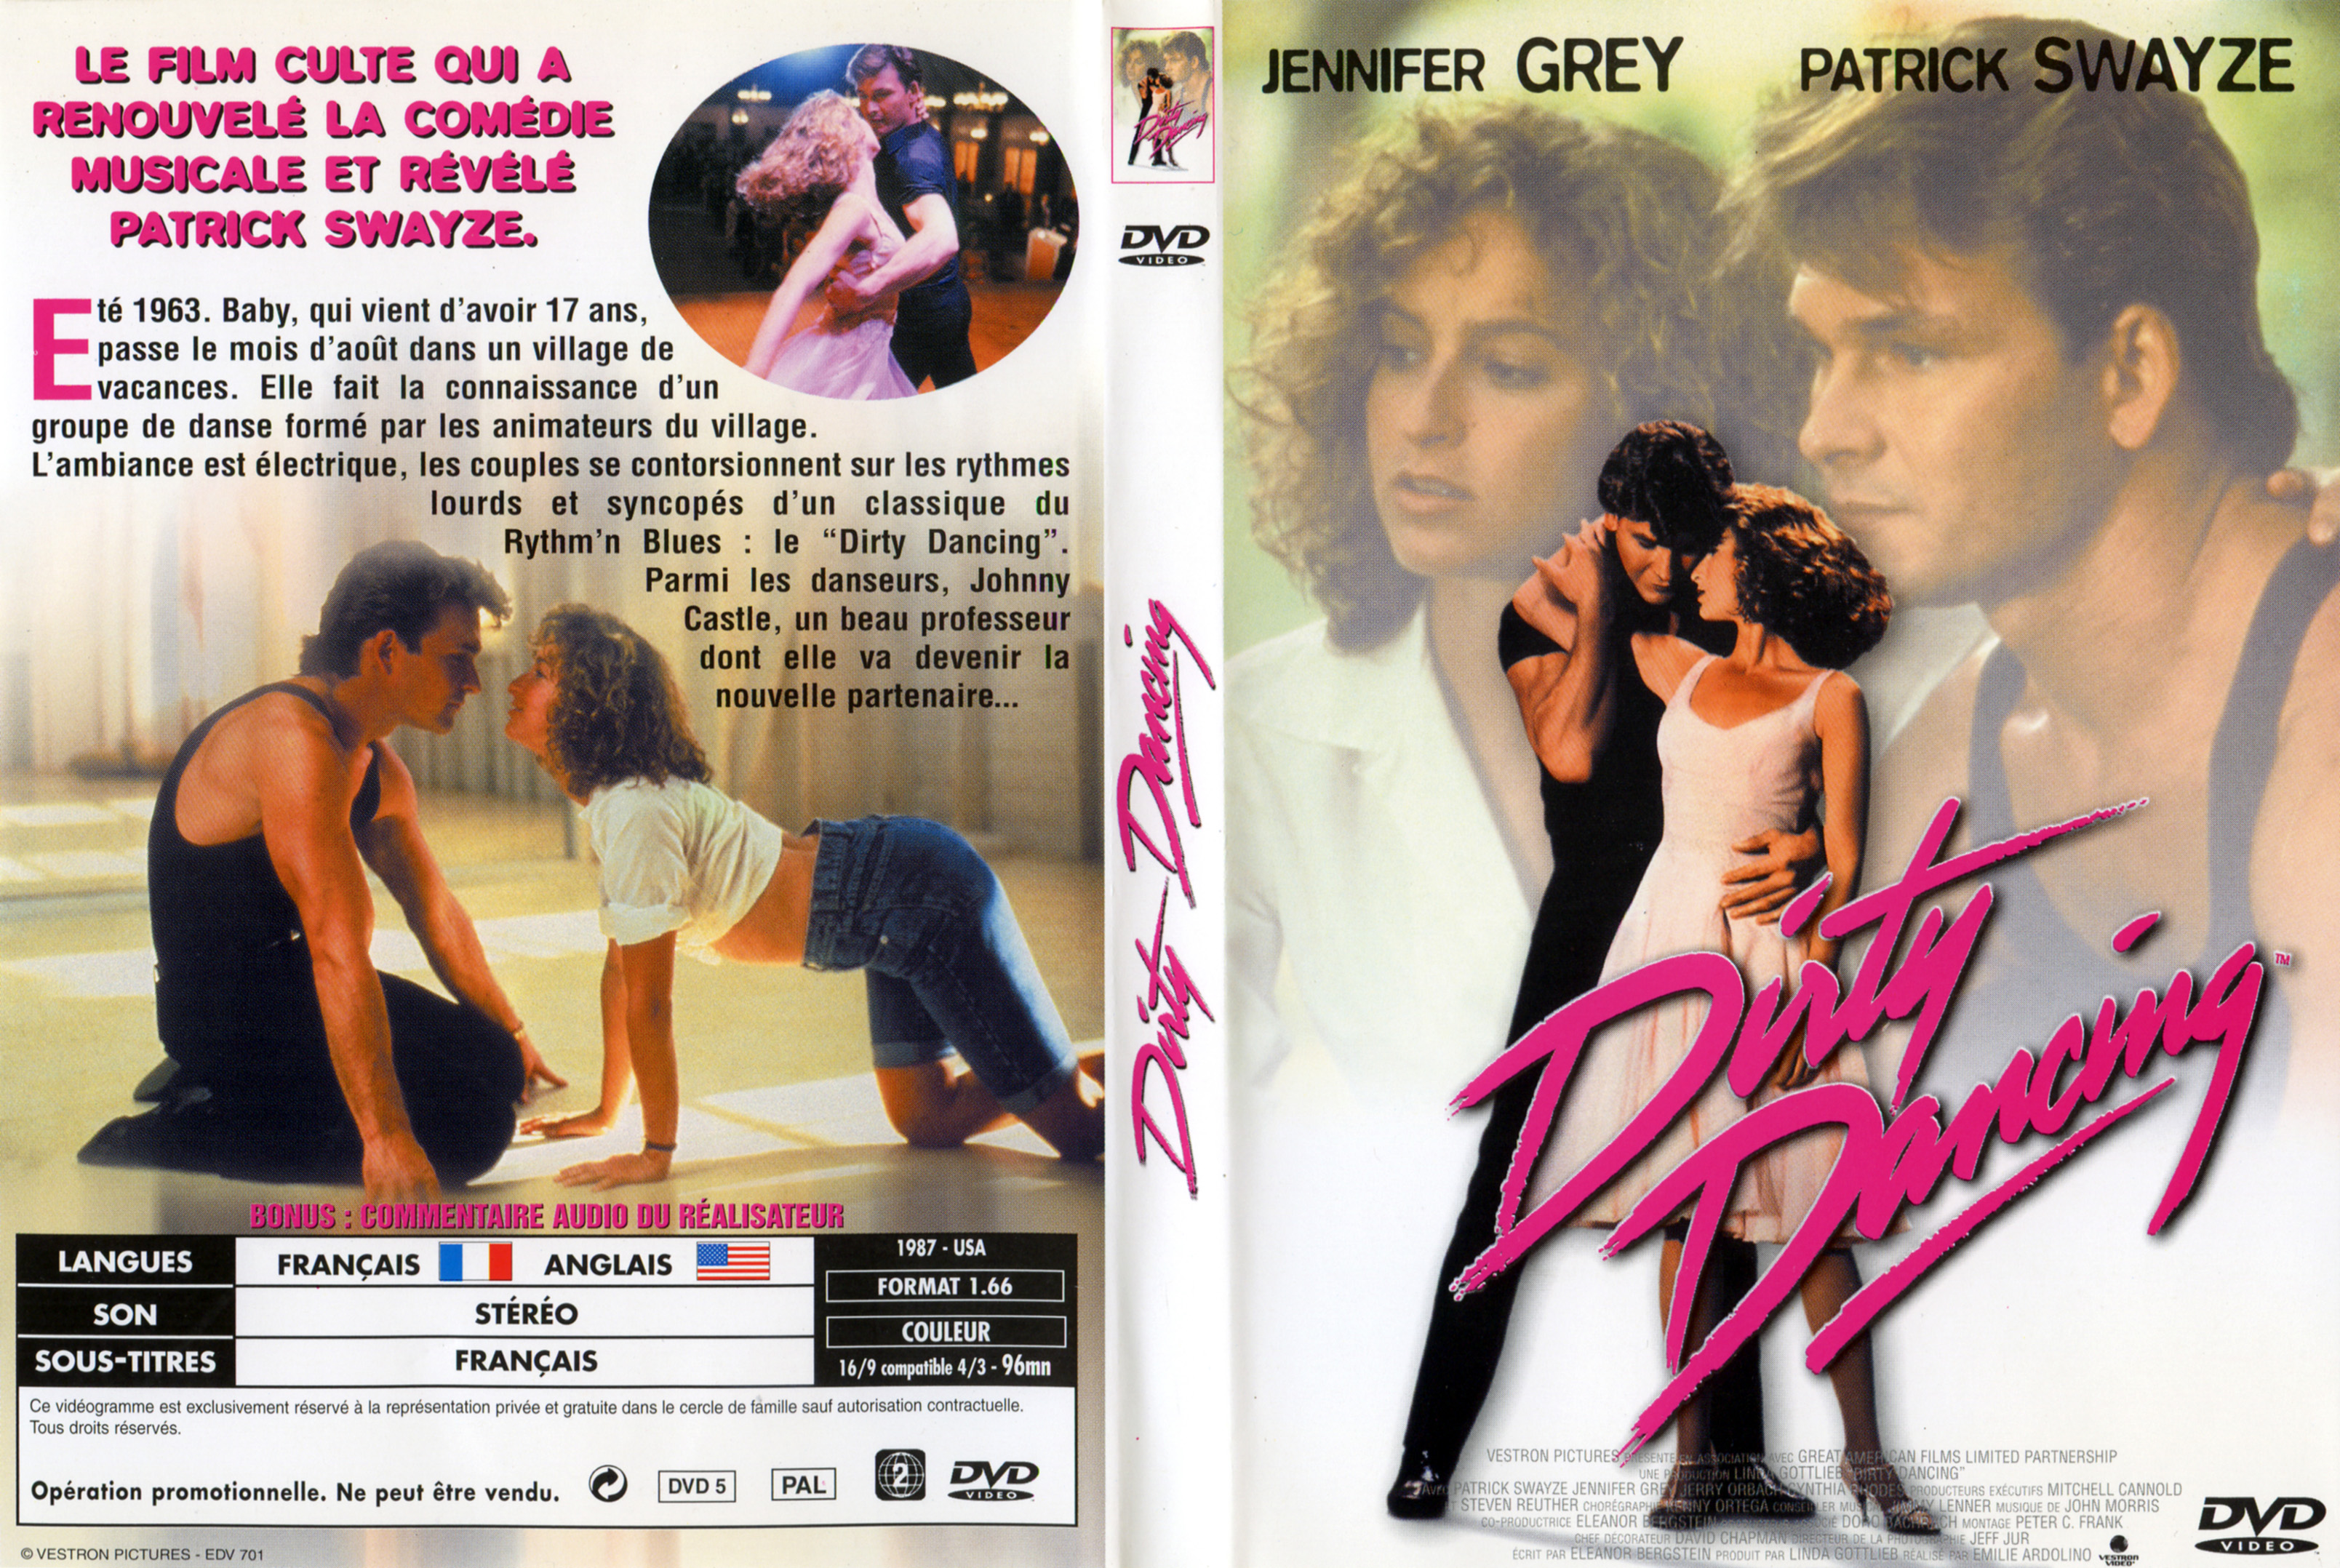 Jaquette DVD Dirty dancing